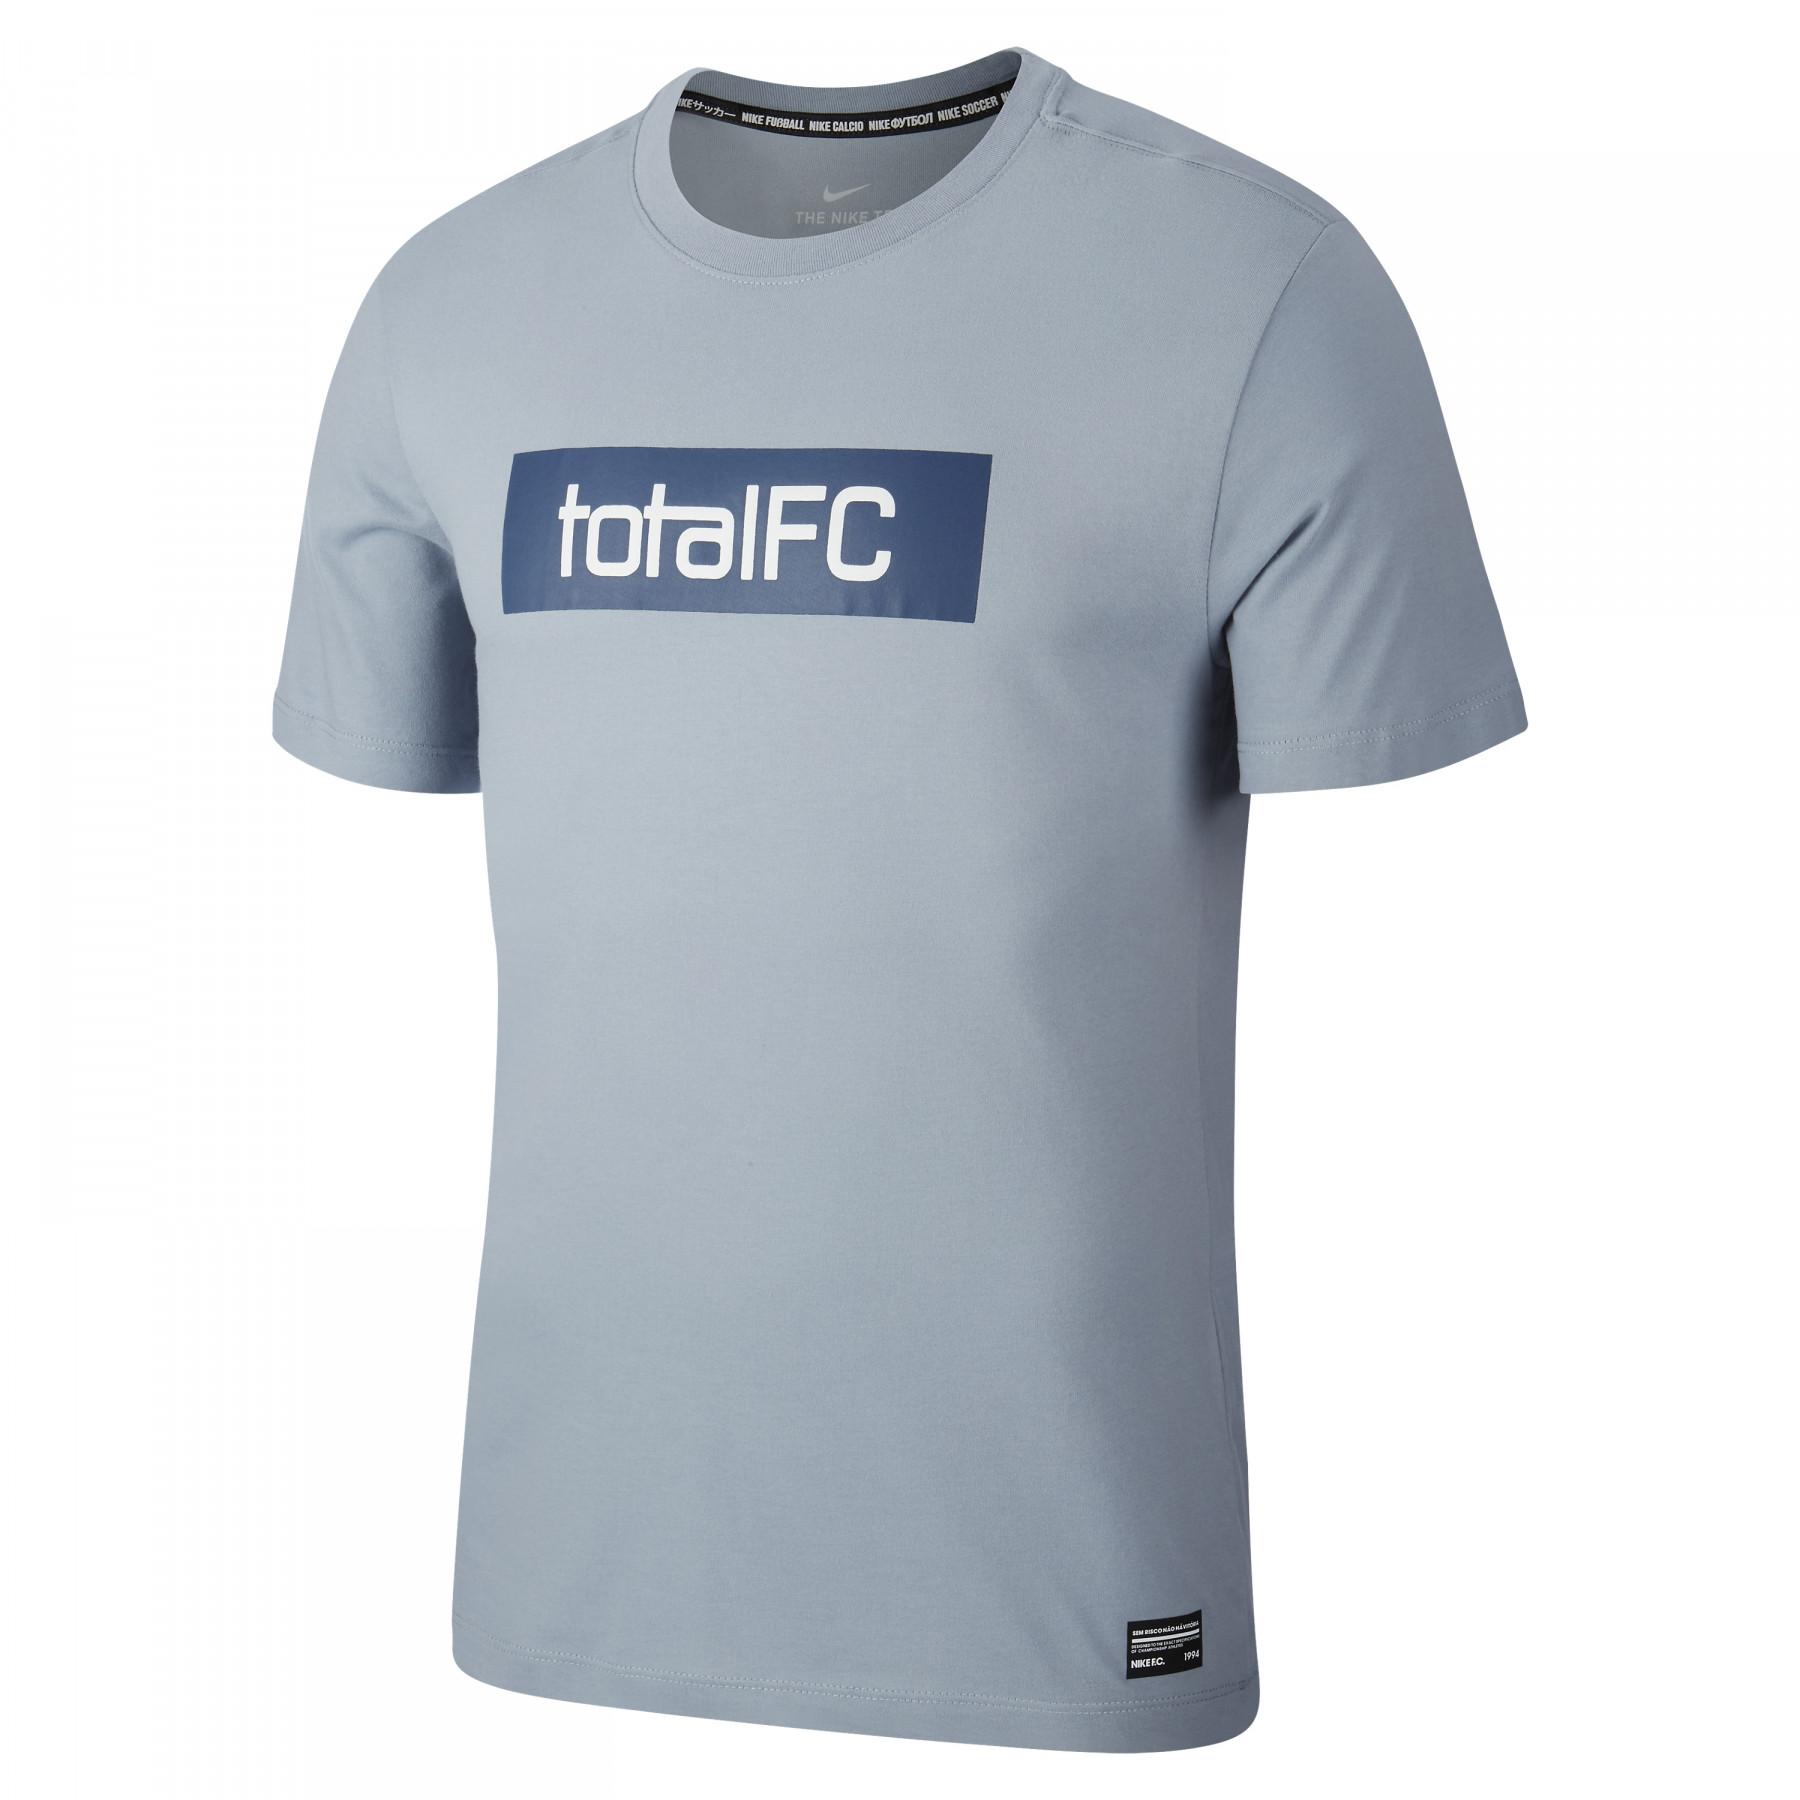 Koszulka Nike F.C. Dry